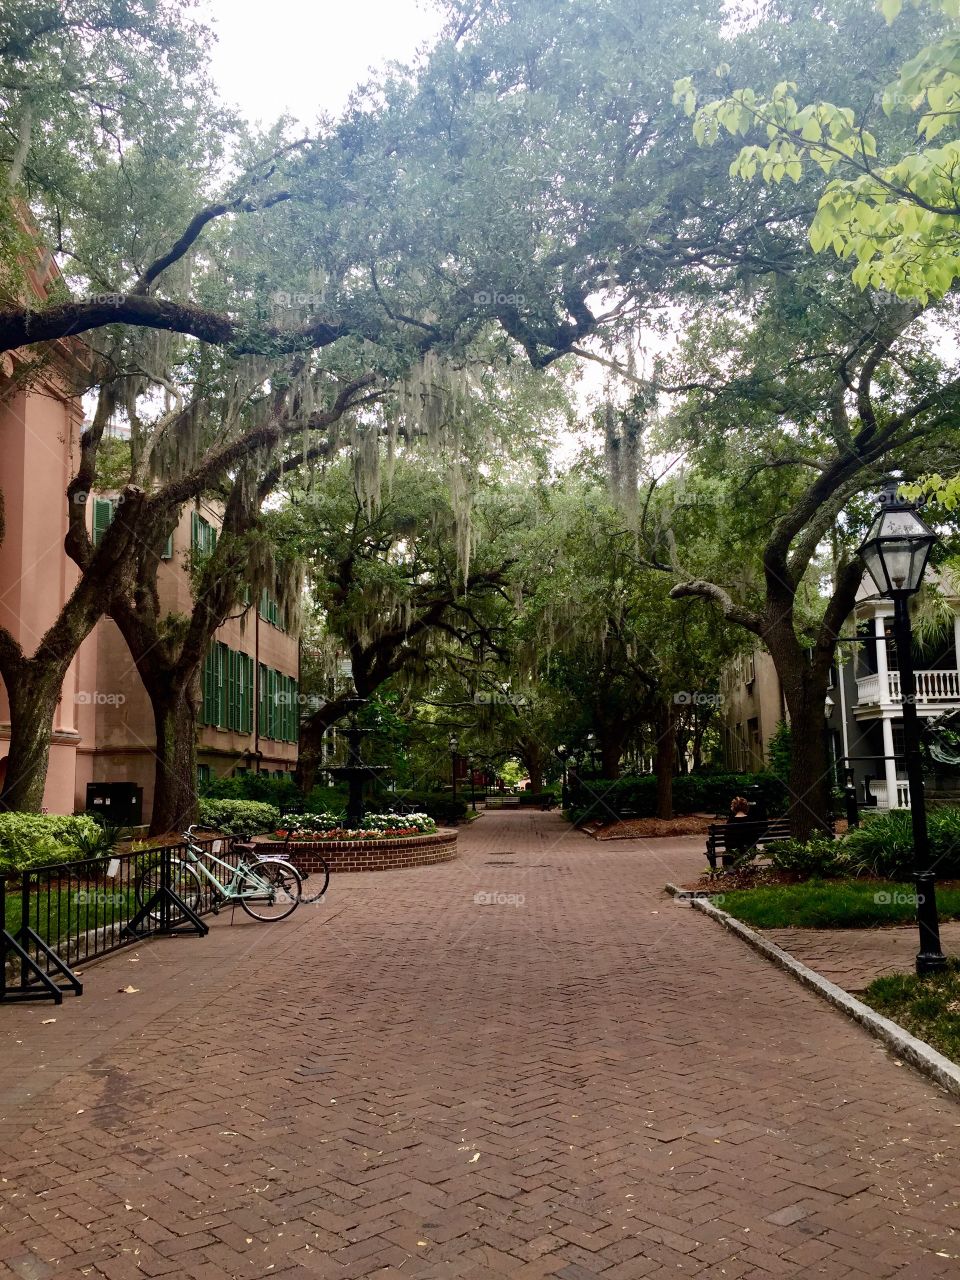 College of Charleston 